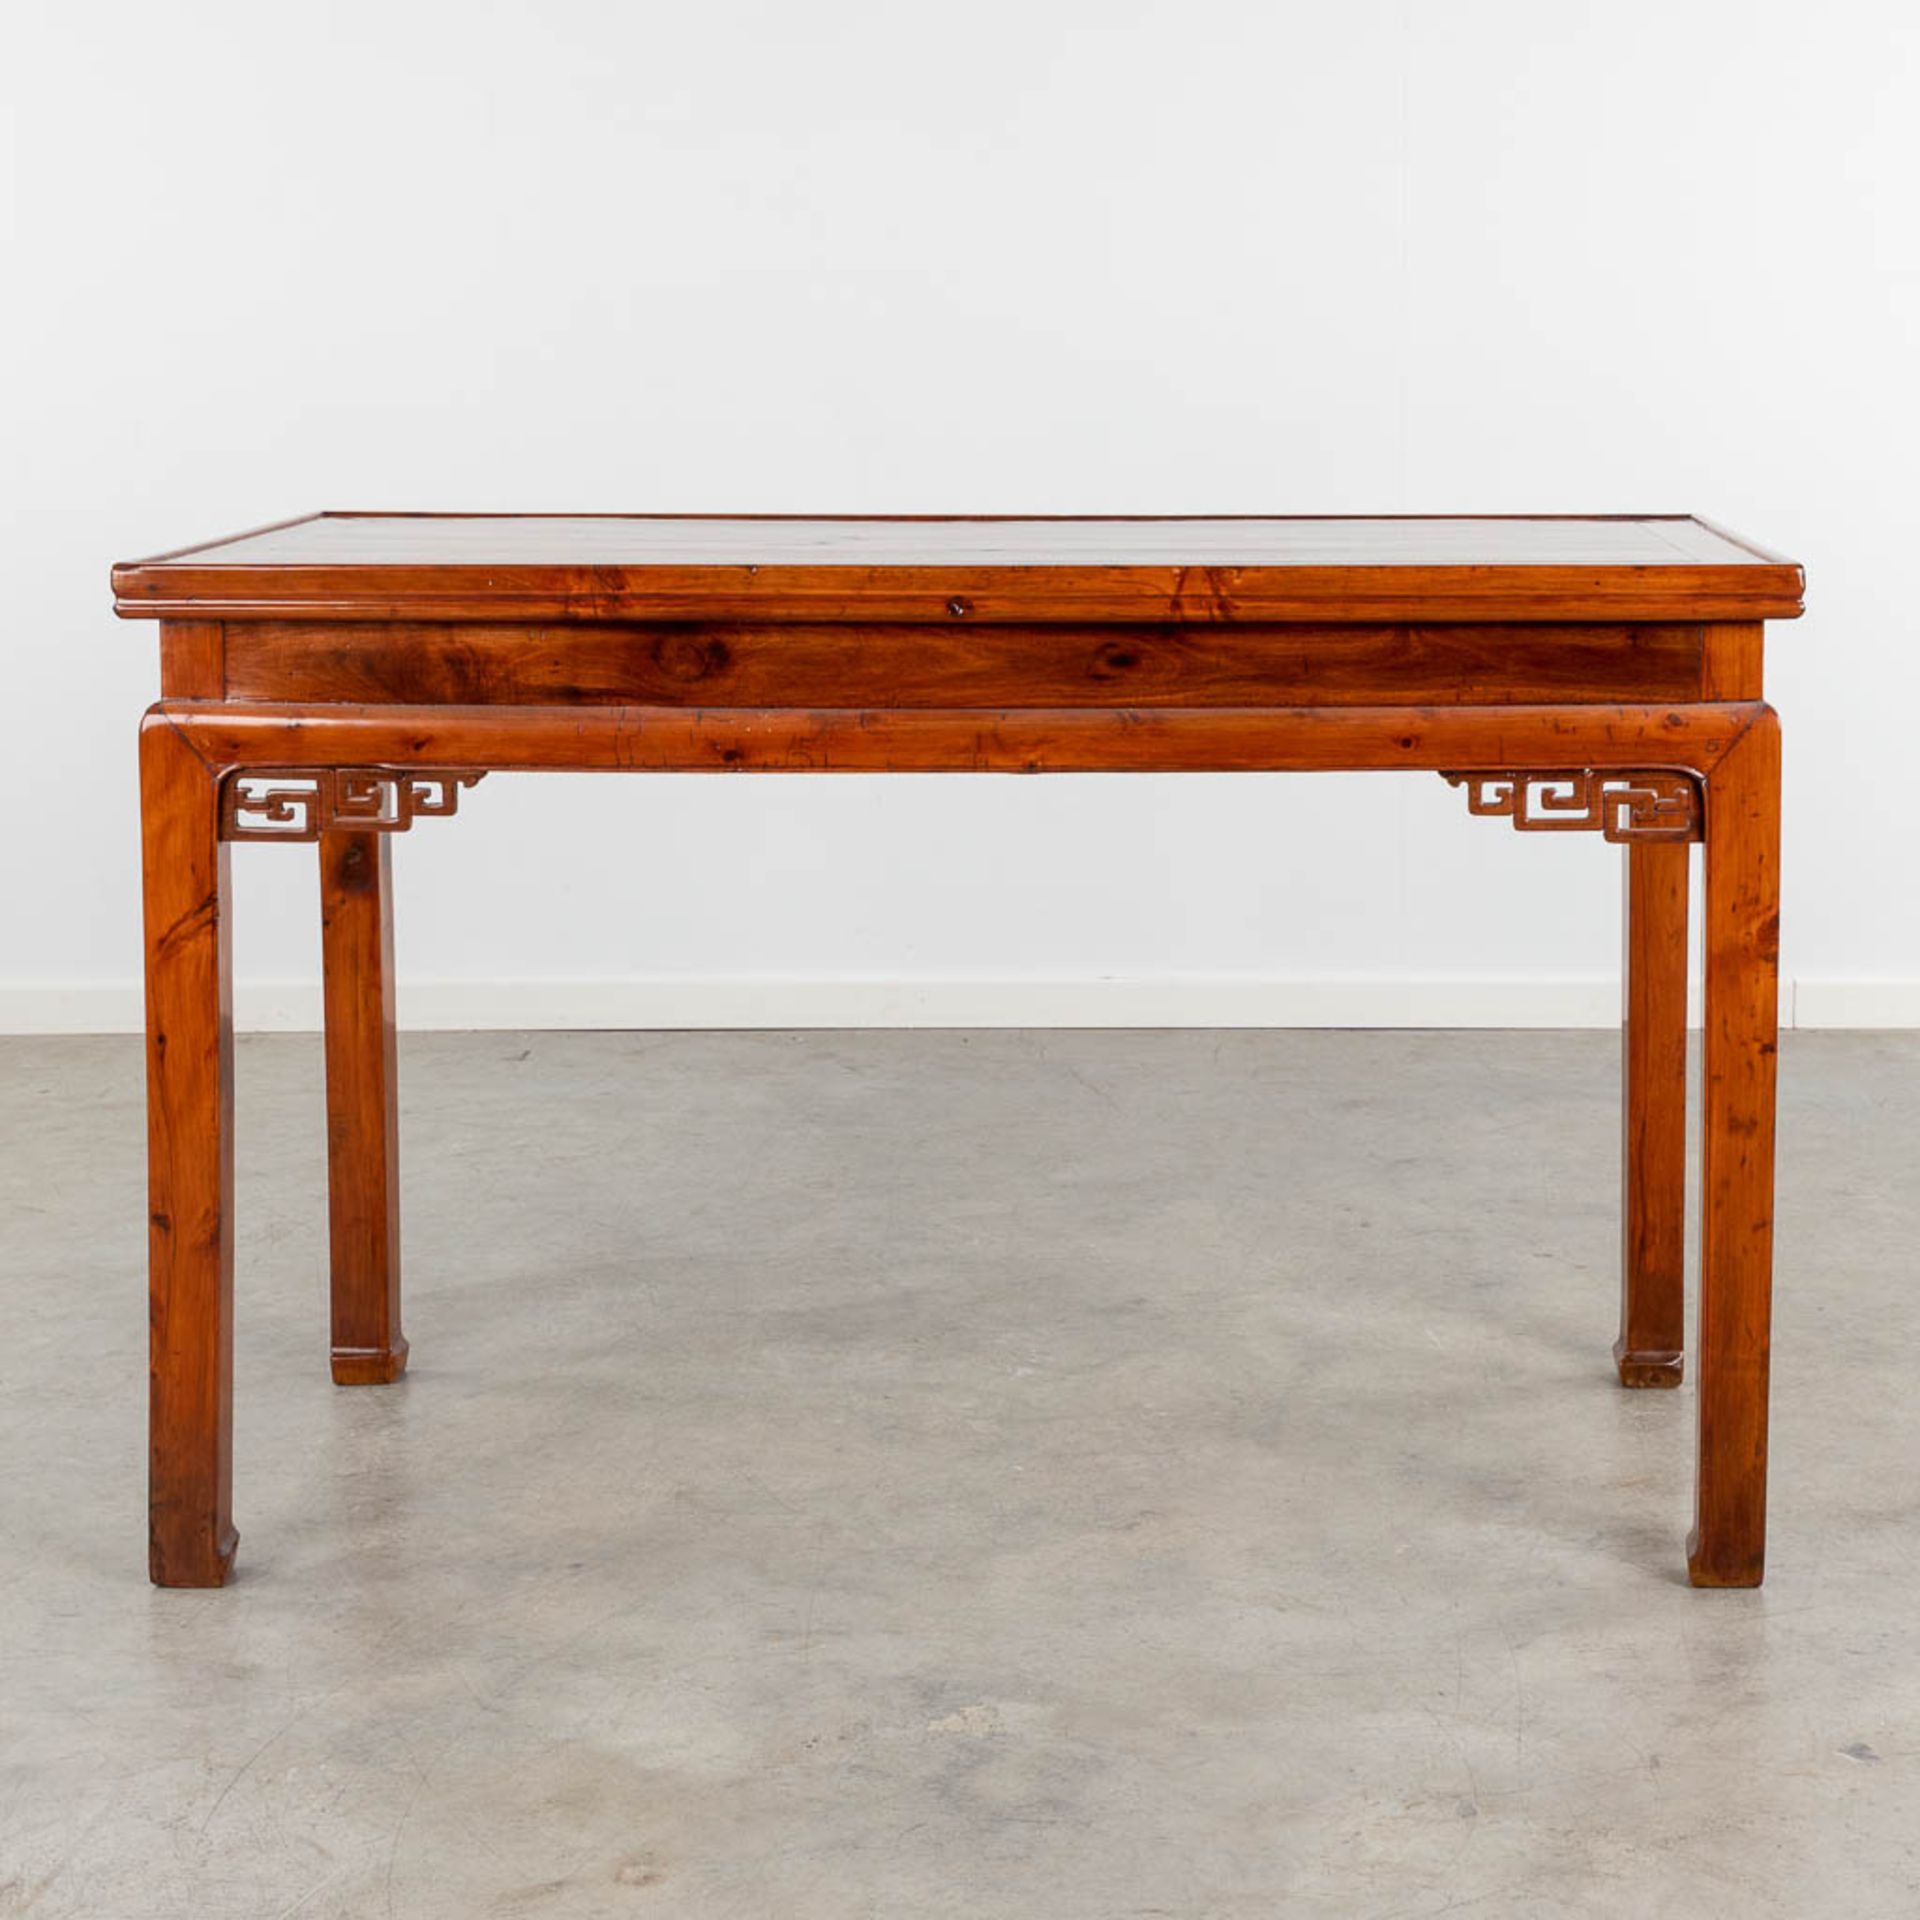 An antique Chinese side table, hardwood. (L:60 x W:130 x H:82 cm) - Bild 5 aus 15